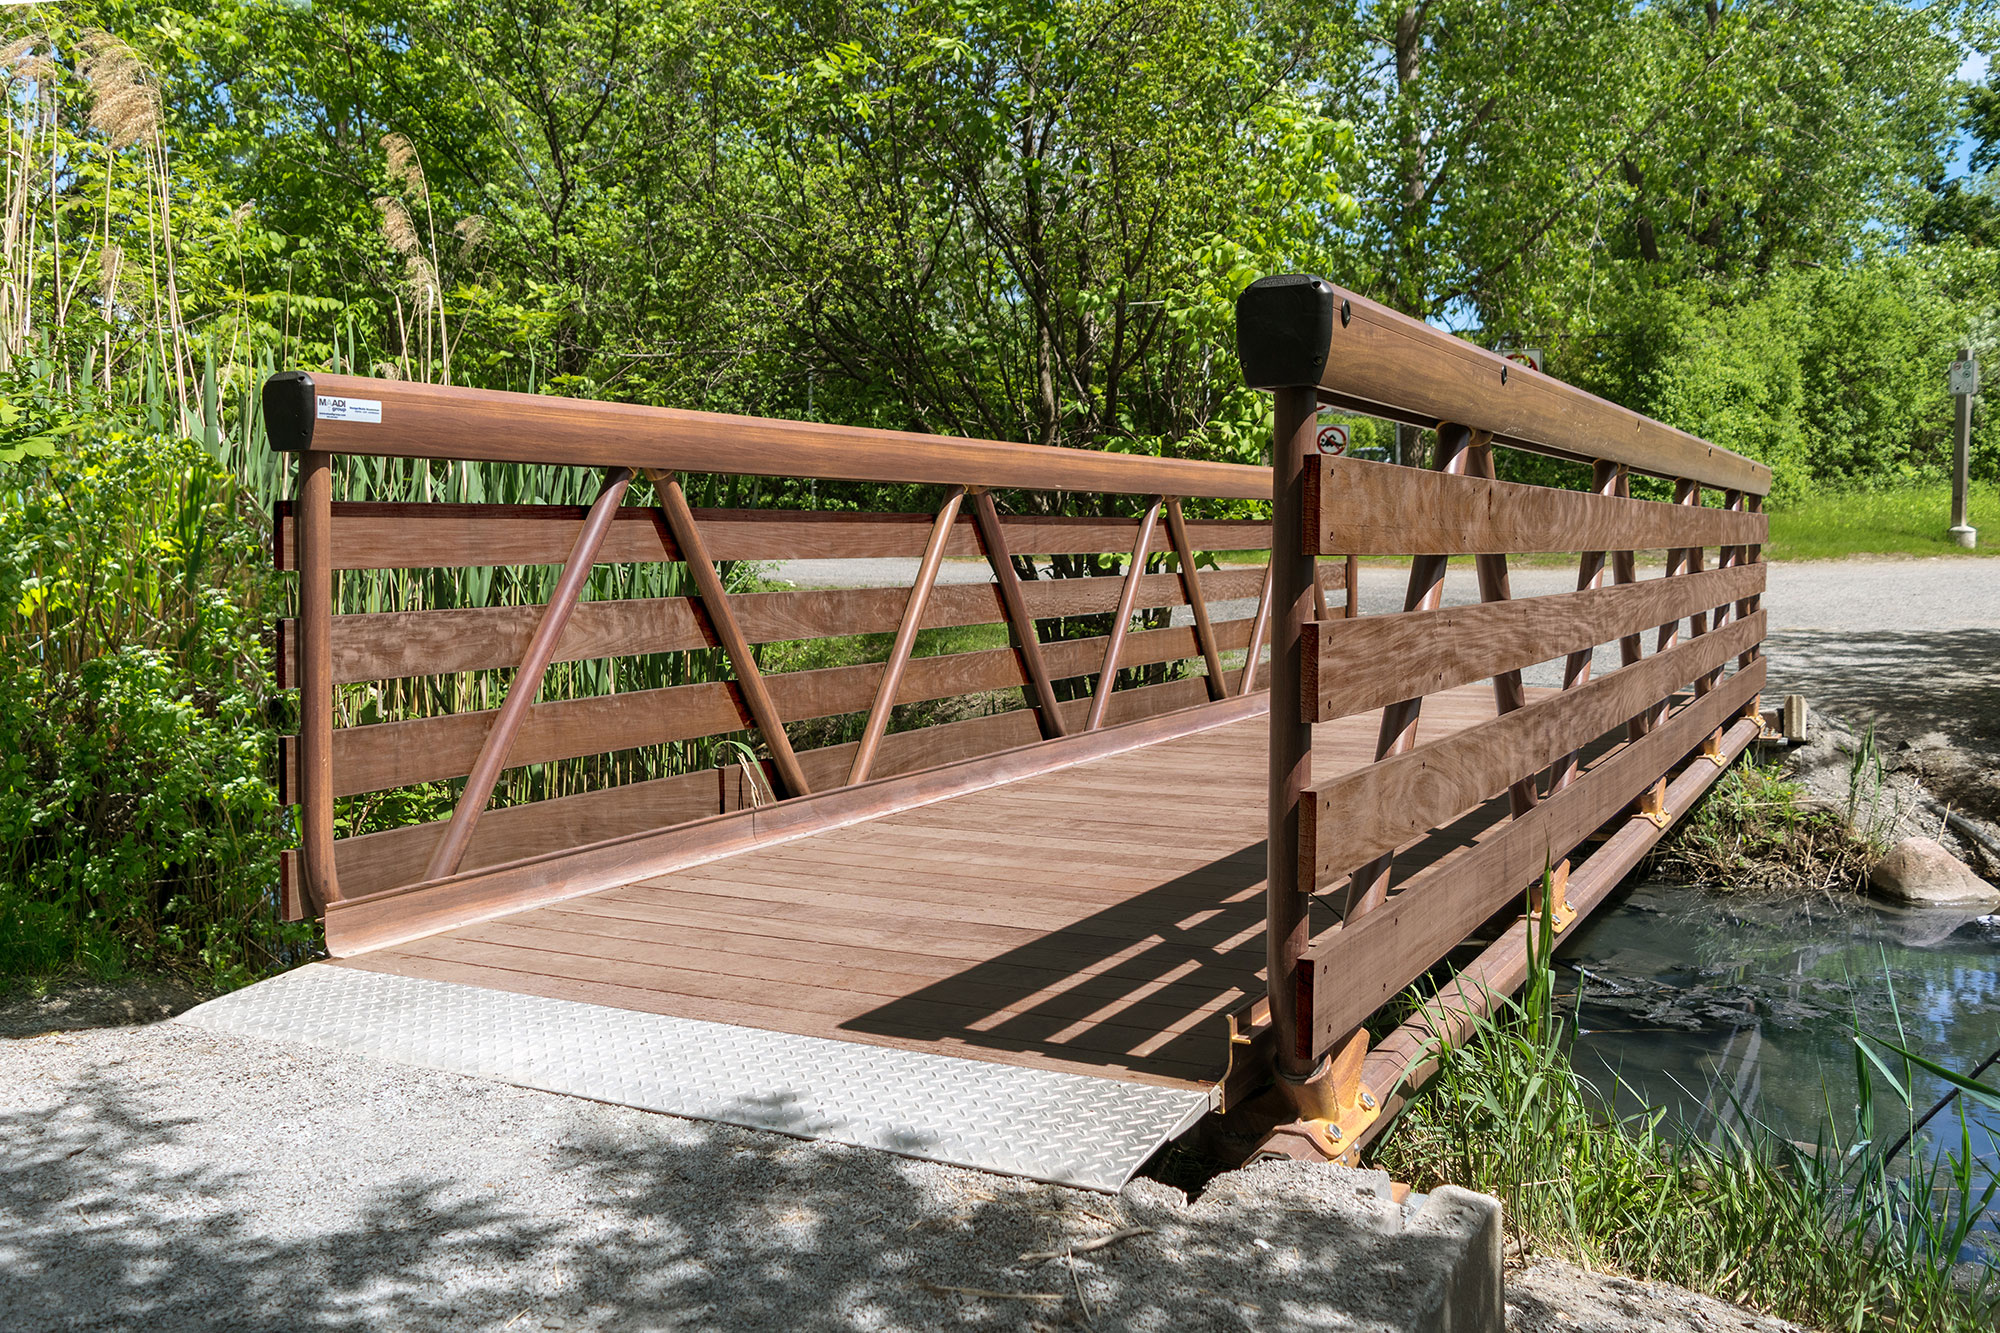 Aluminum weld-free pedestrian bridge with faux-wood finish in municipal park